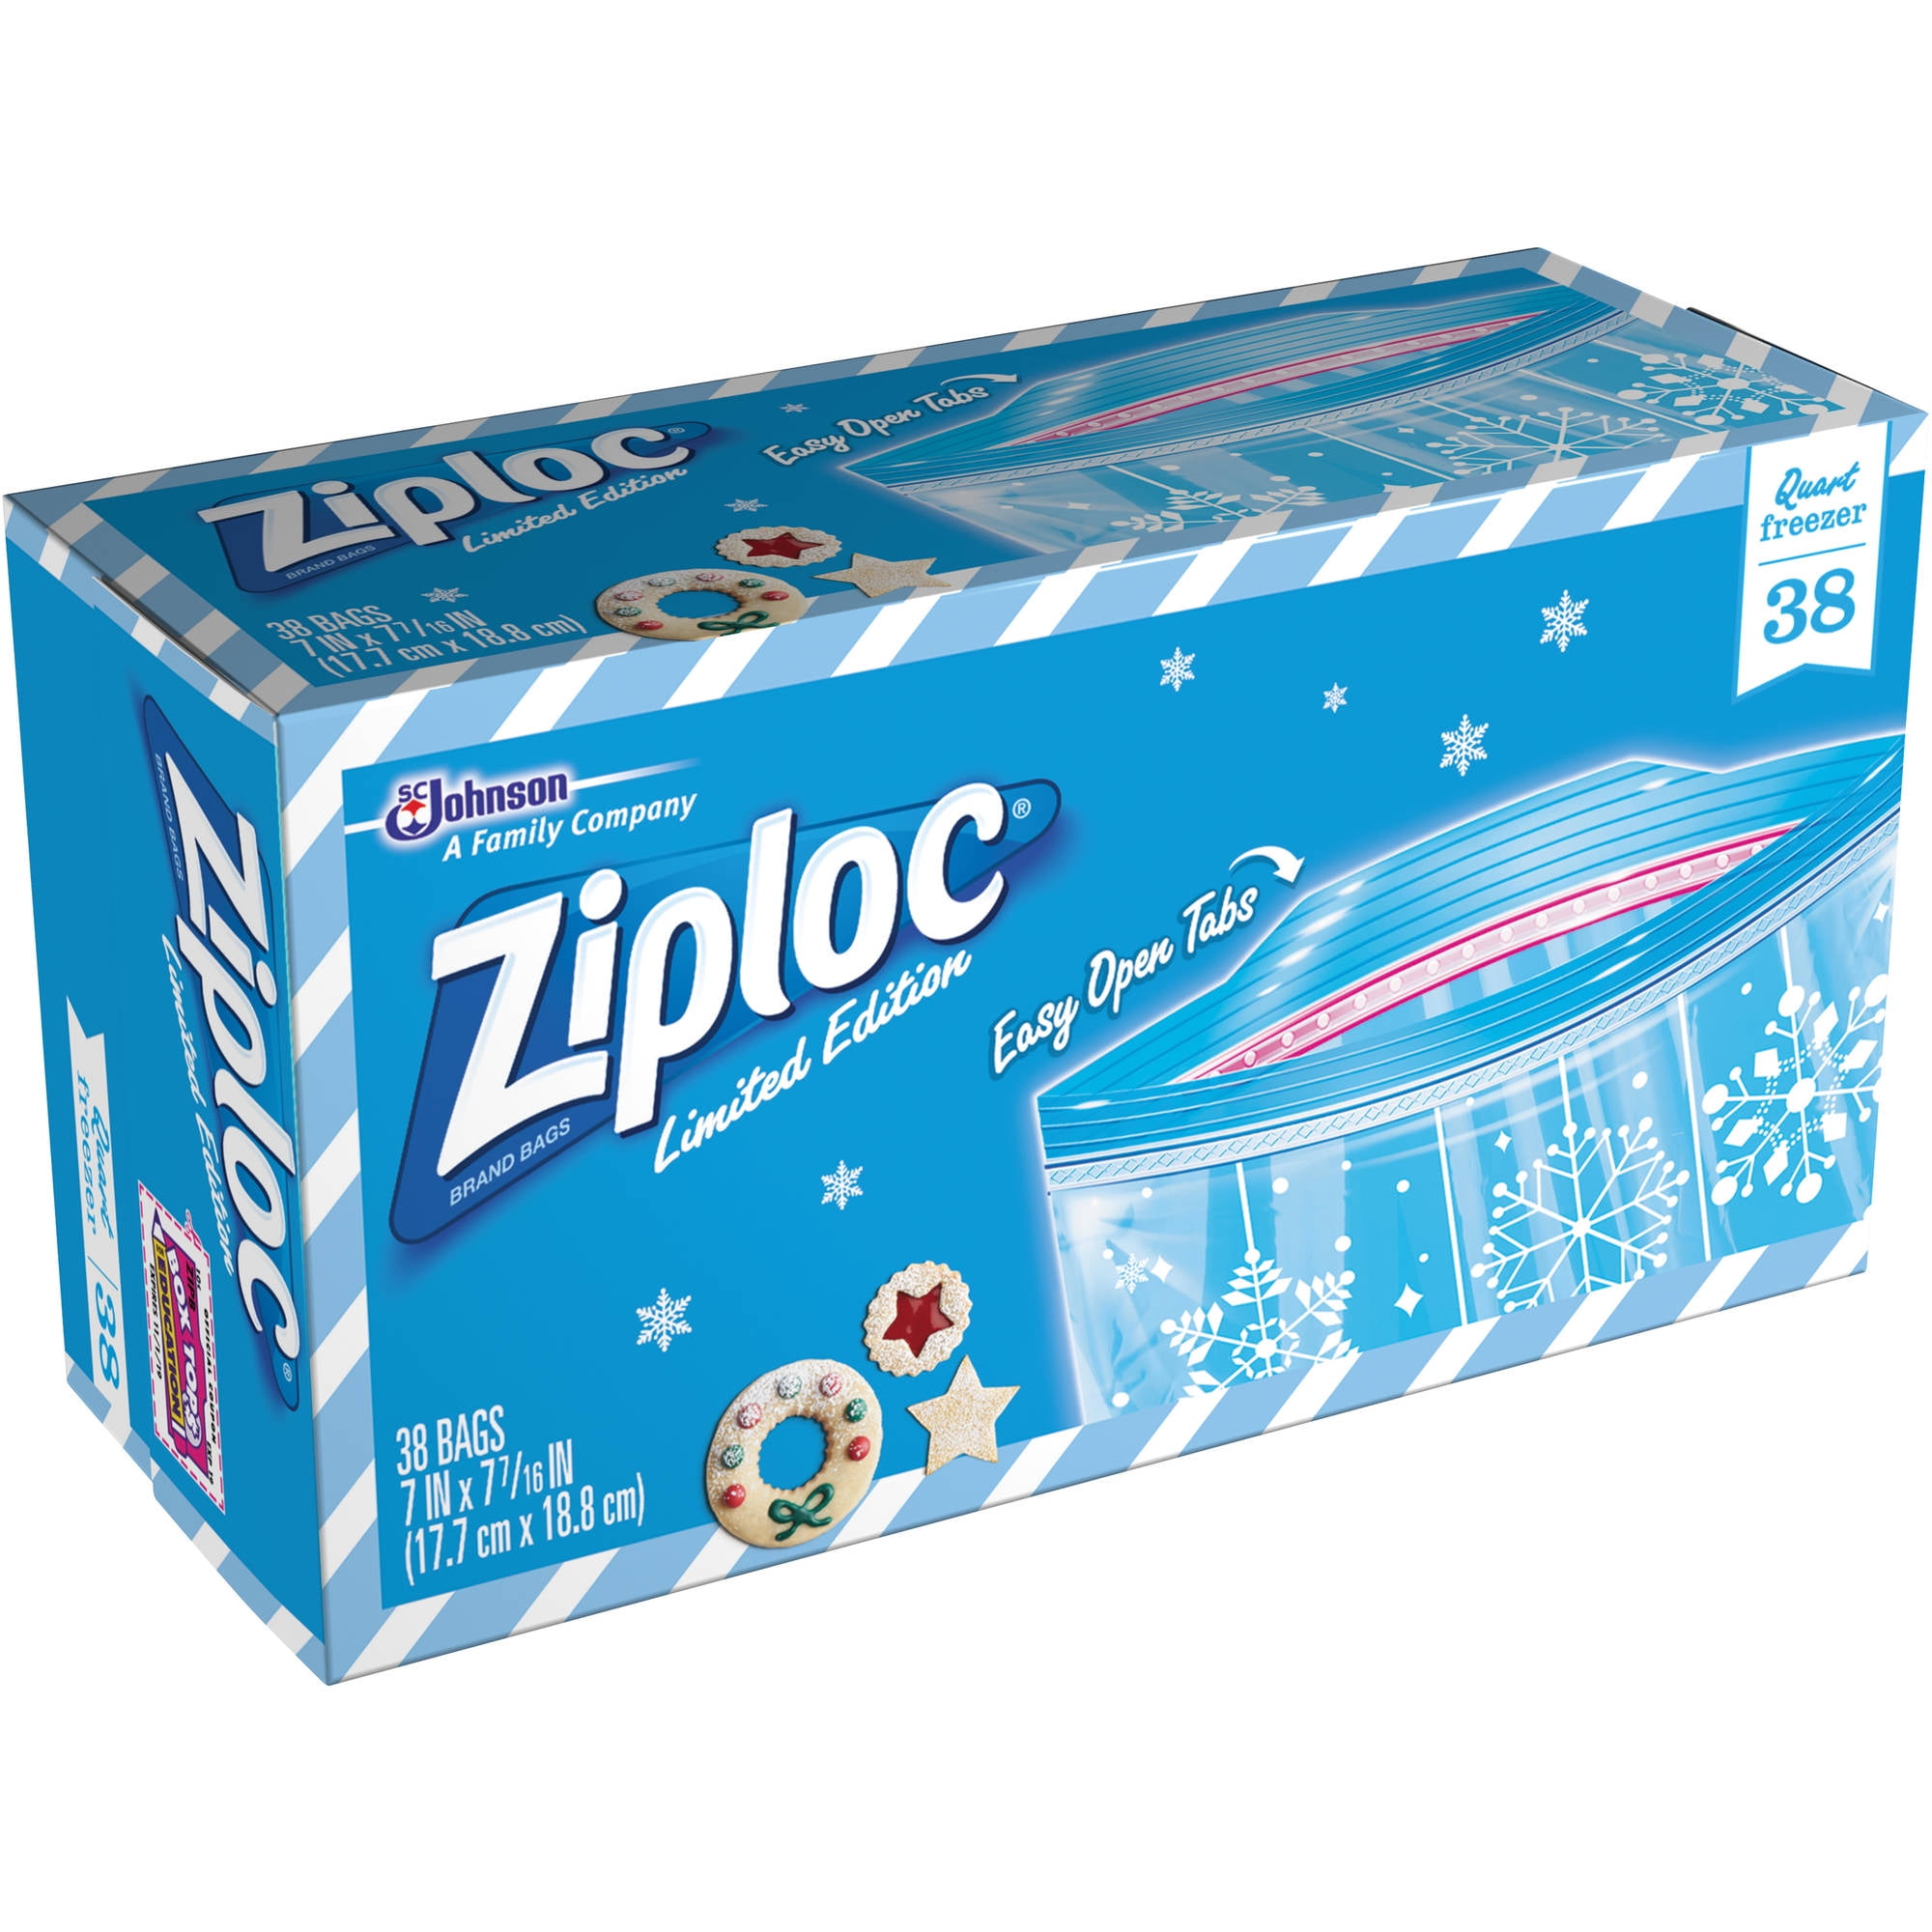 Ziploc® Brand Freezer Bags, Quart, 38 Count 